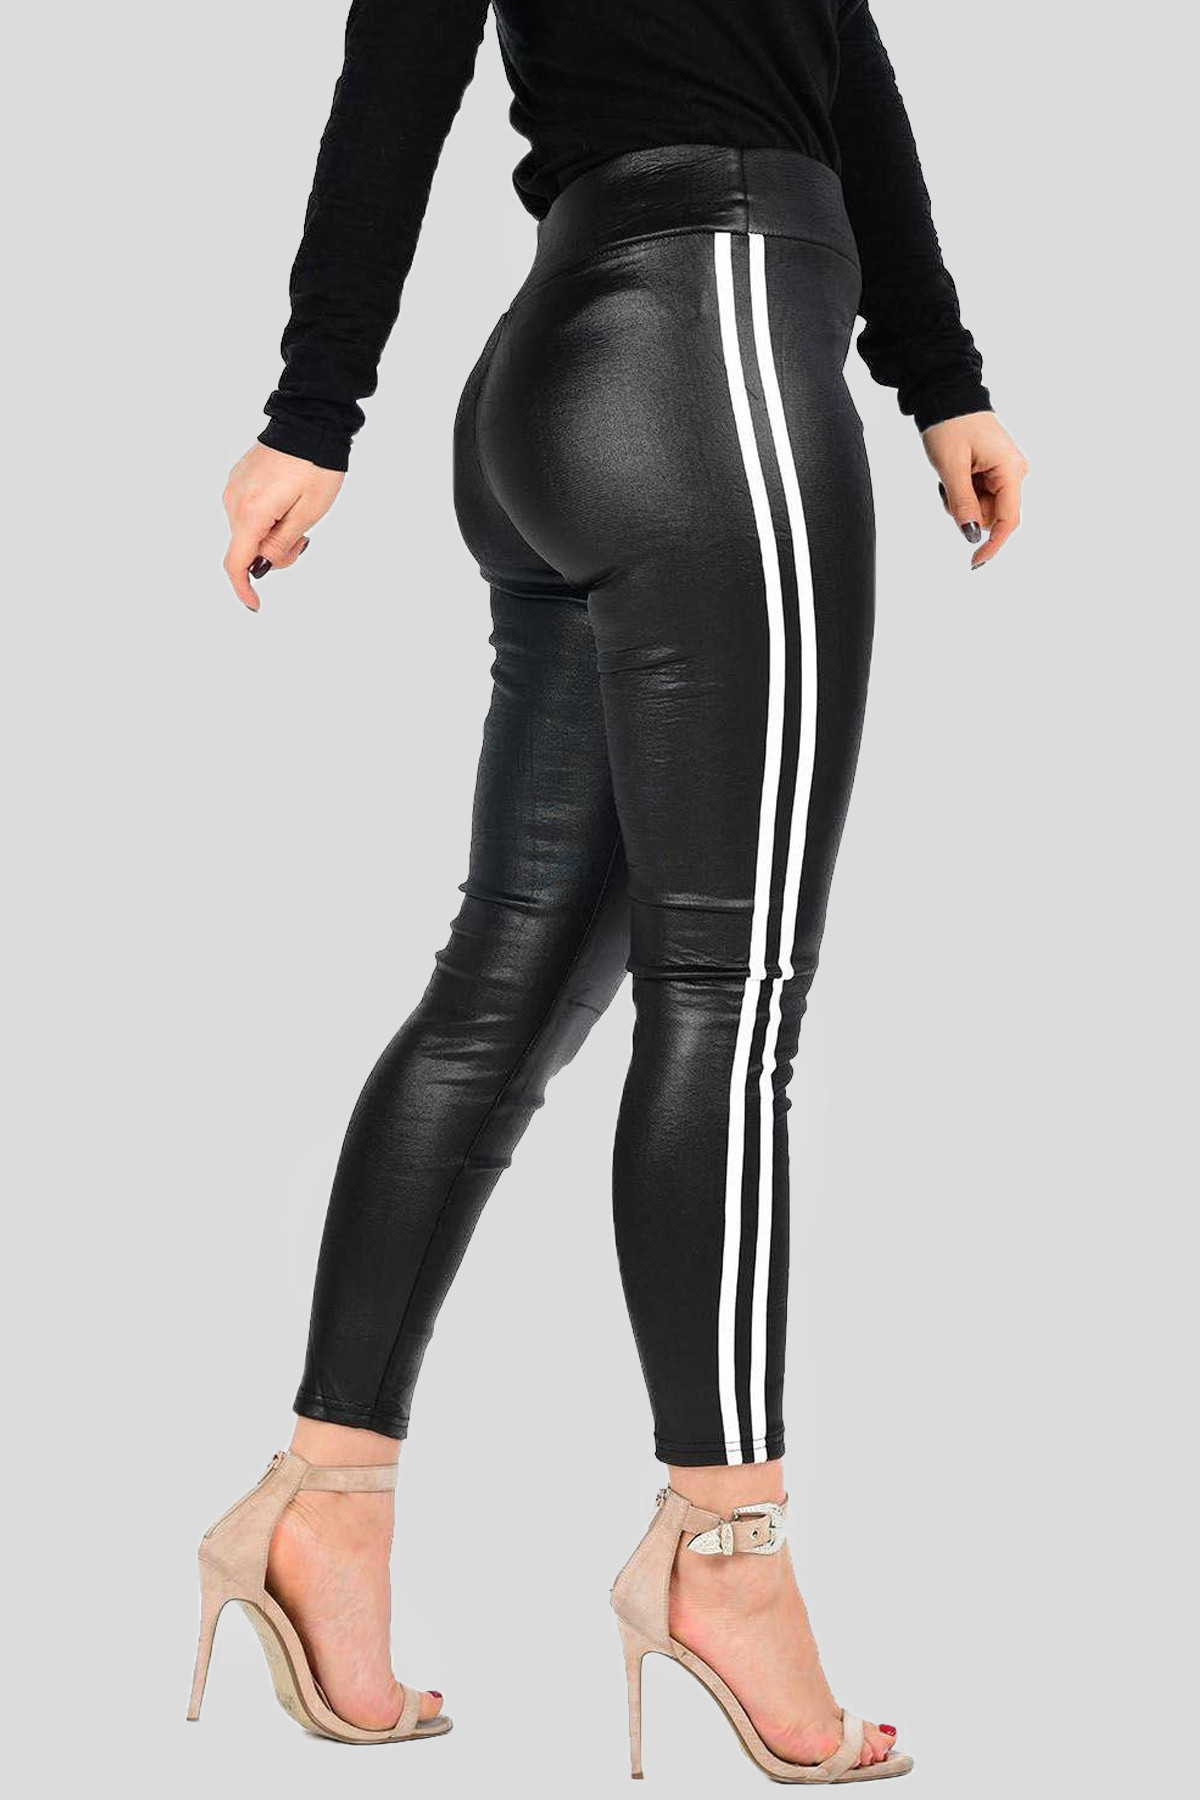 Beatrix Twin Stripe Wet Look PVC High Waist Shiny Pants 8-16